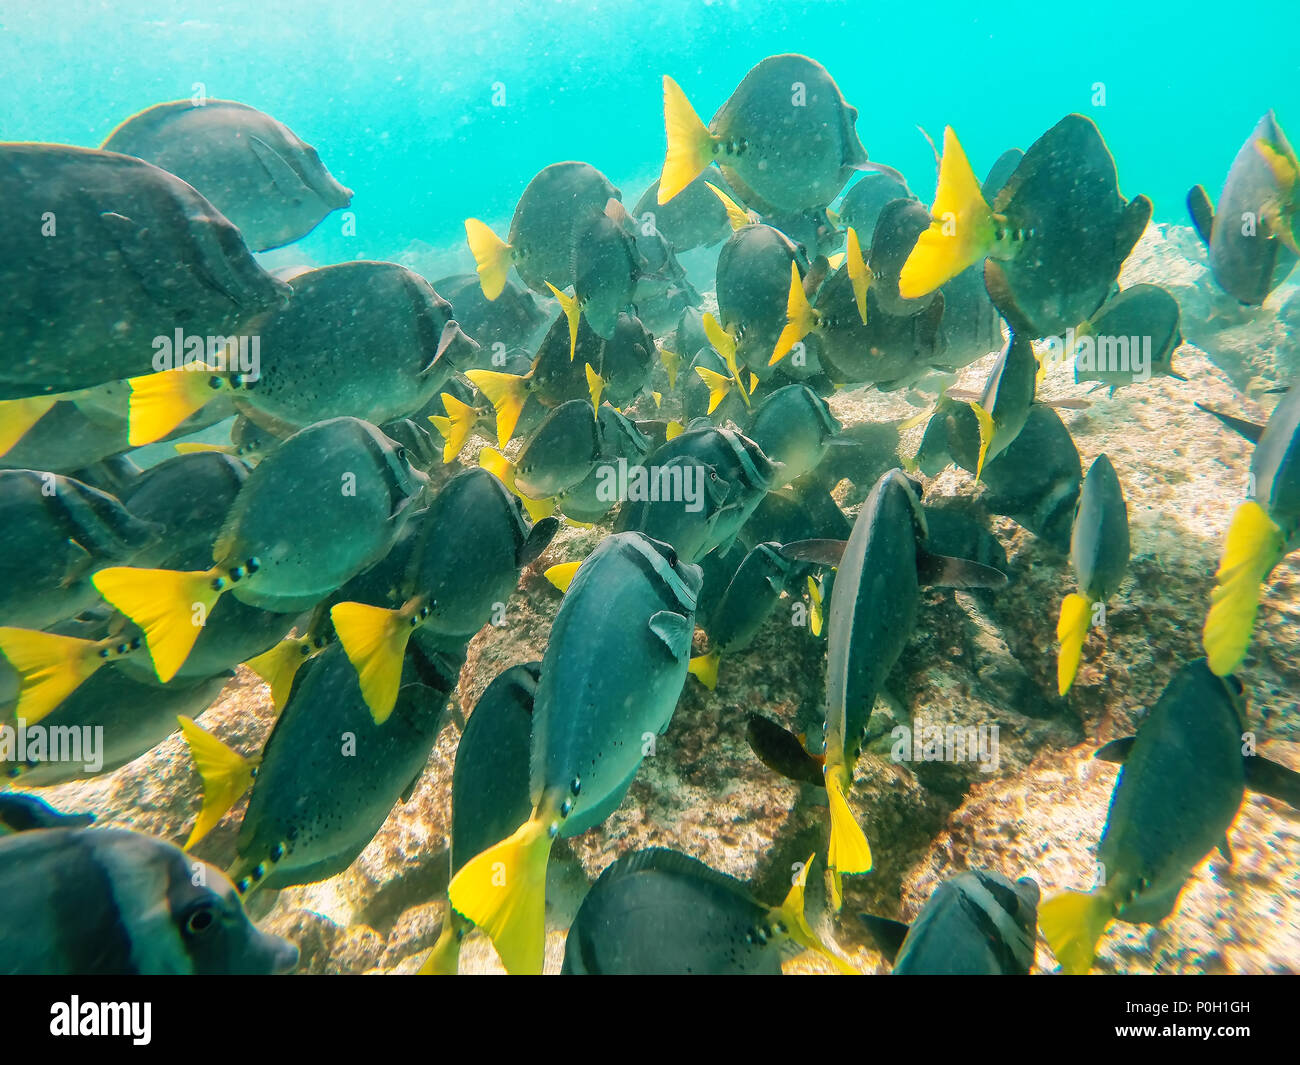 School of Yellow-tailed surgeonfish (Prionurus laticlavius) off the coast of Espanola Island, Galapagos National park, Ecuador. Stock Photo